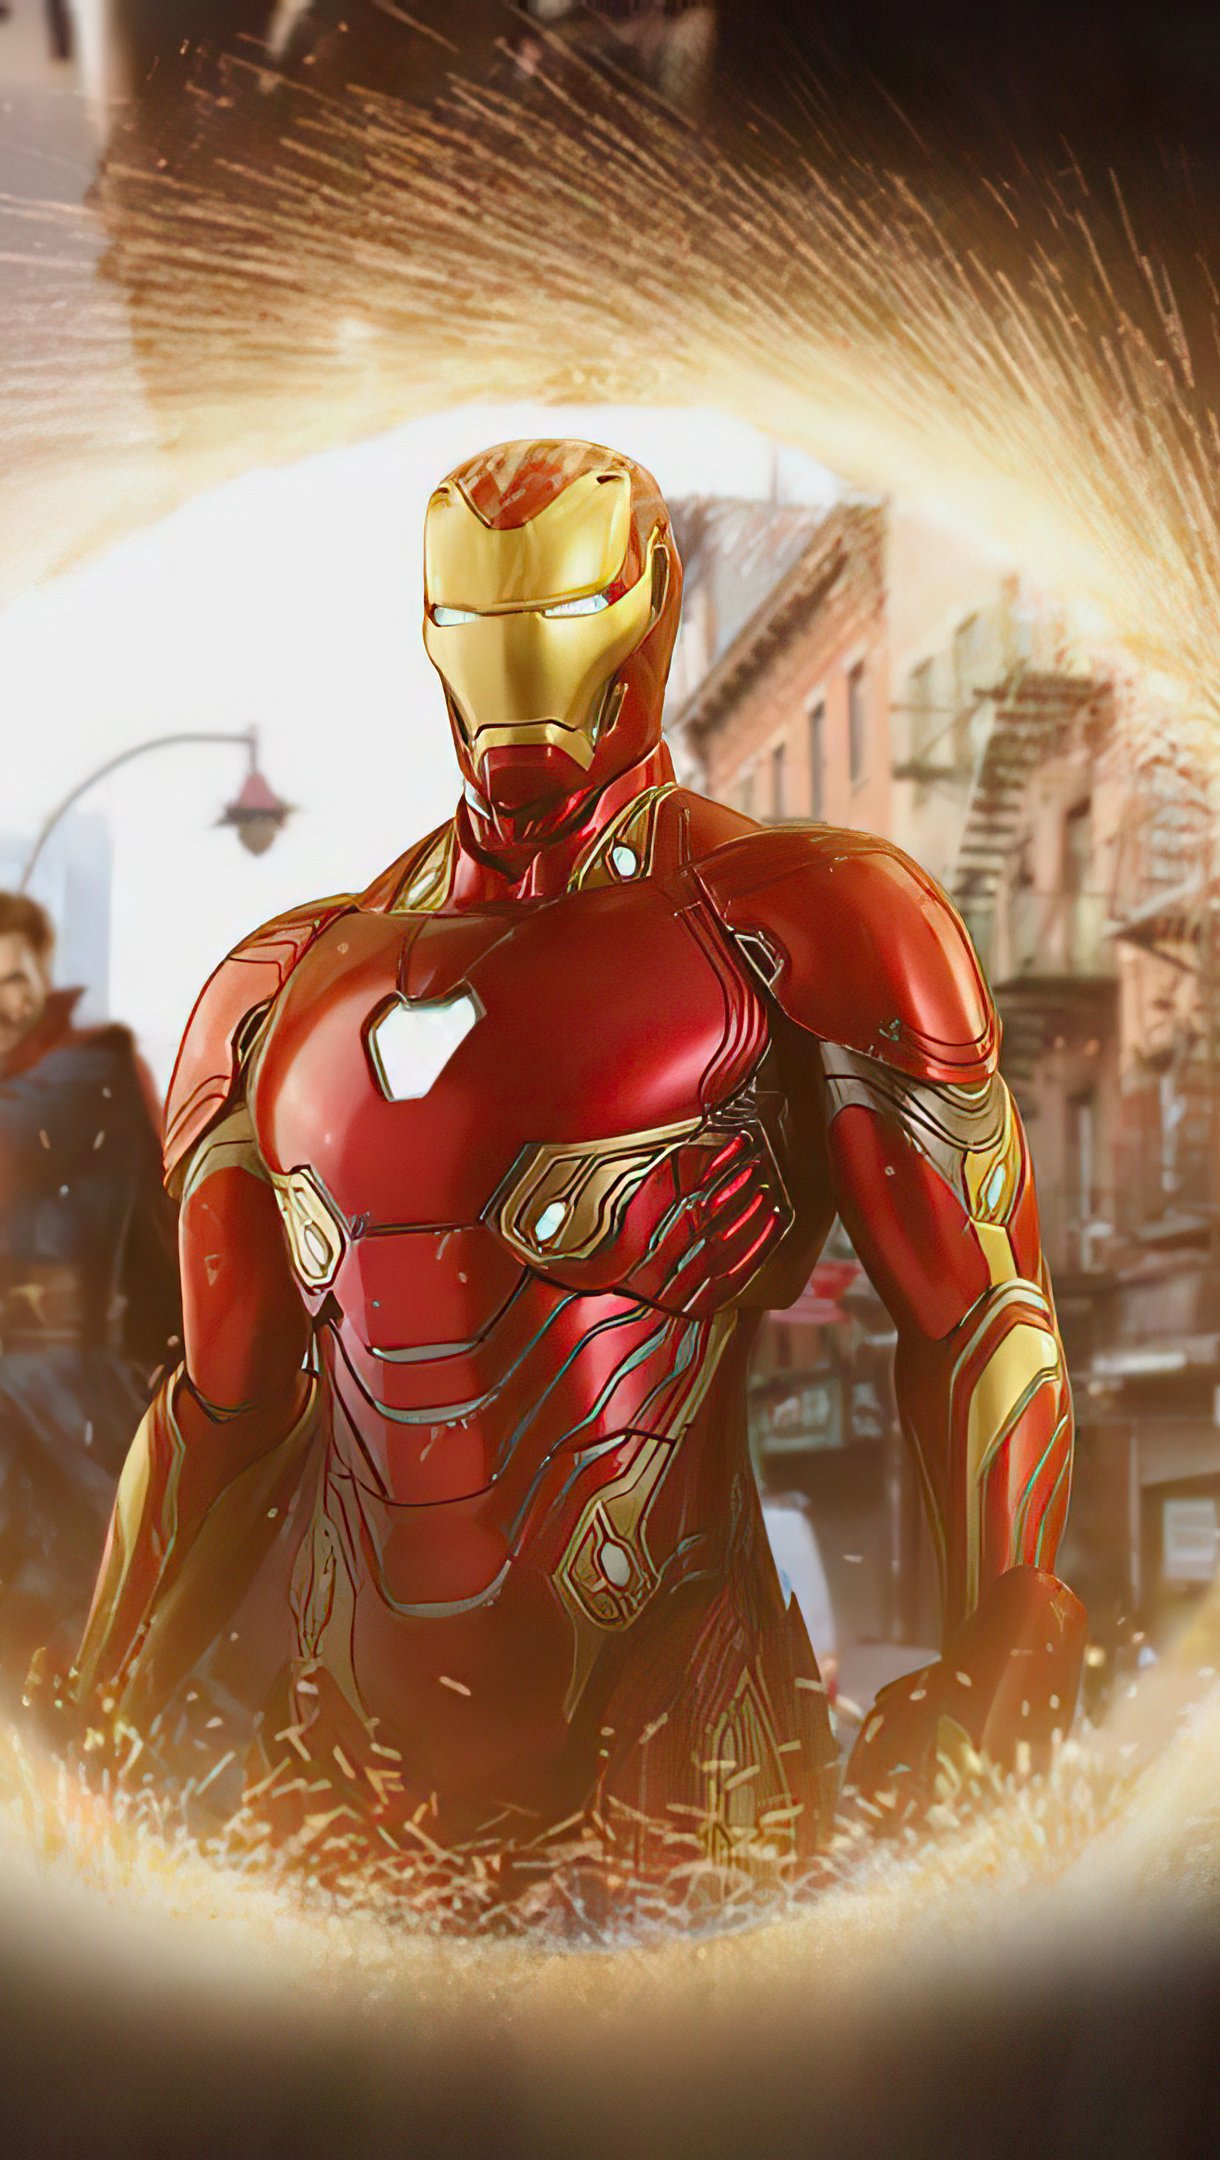 Iron Man with Doctor Strange Wallpaper 4k Ultra HD ID:6129